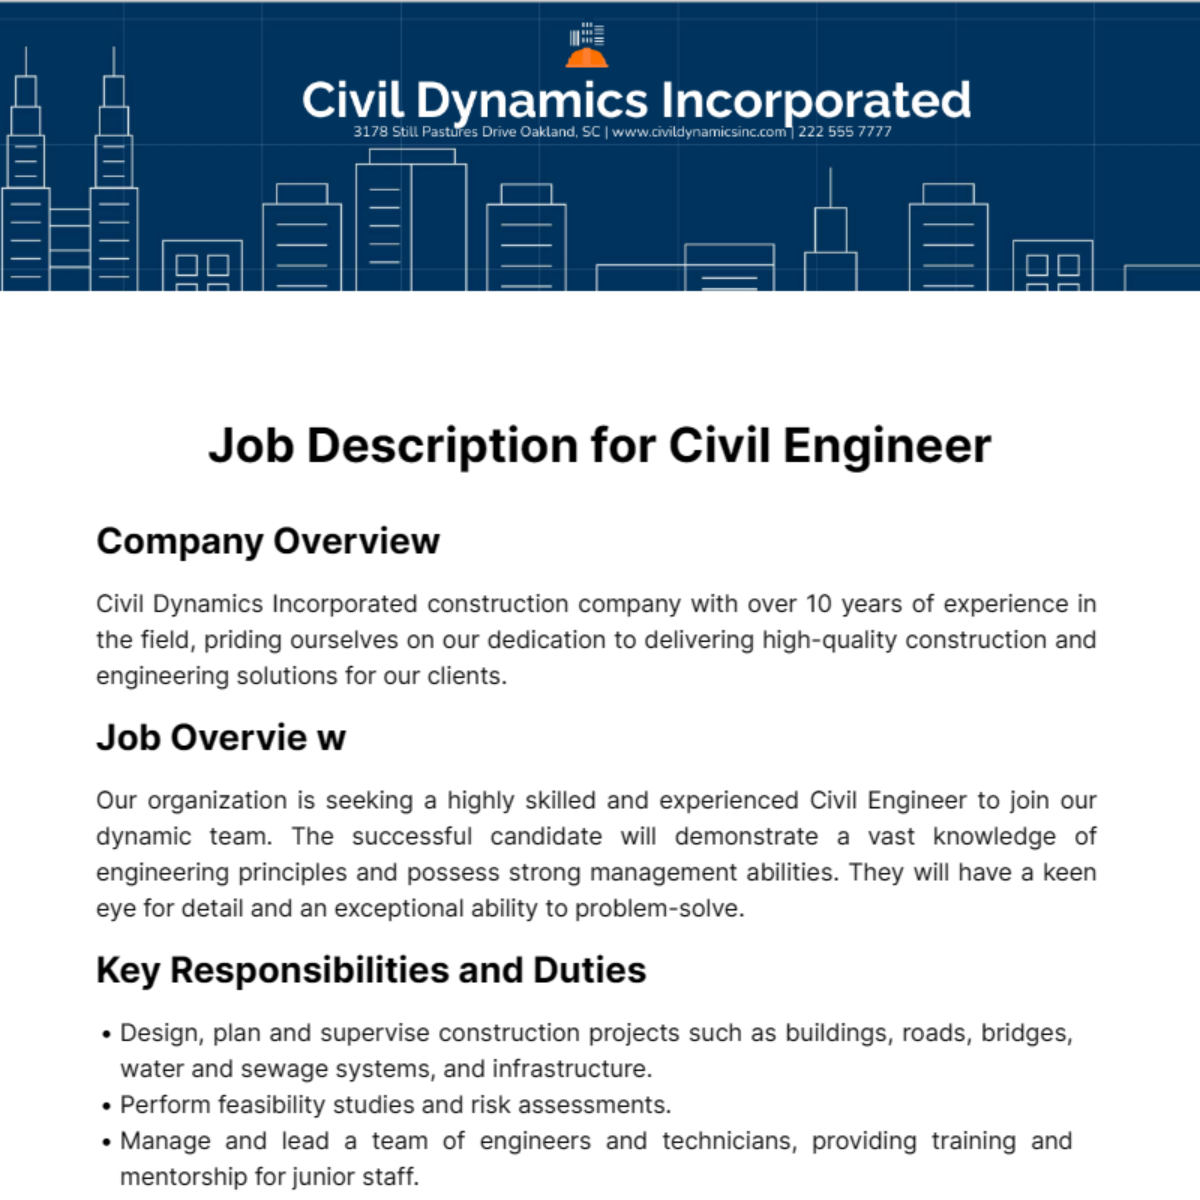 Job Description for Civil Engineer Template